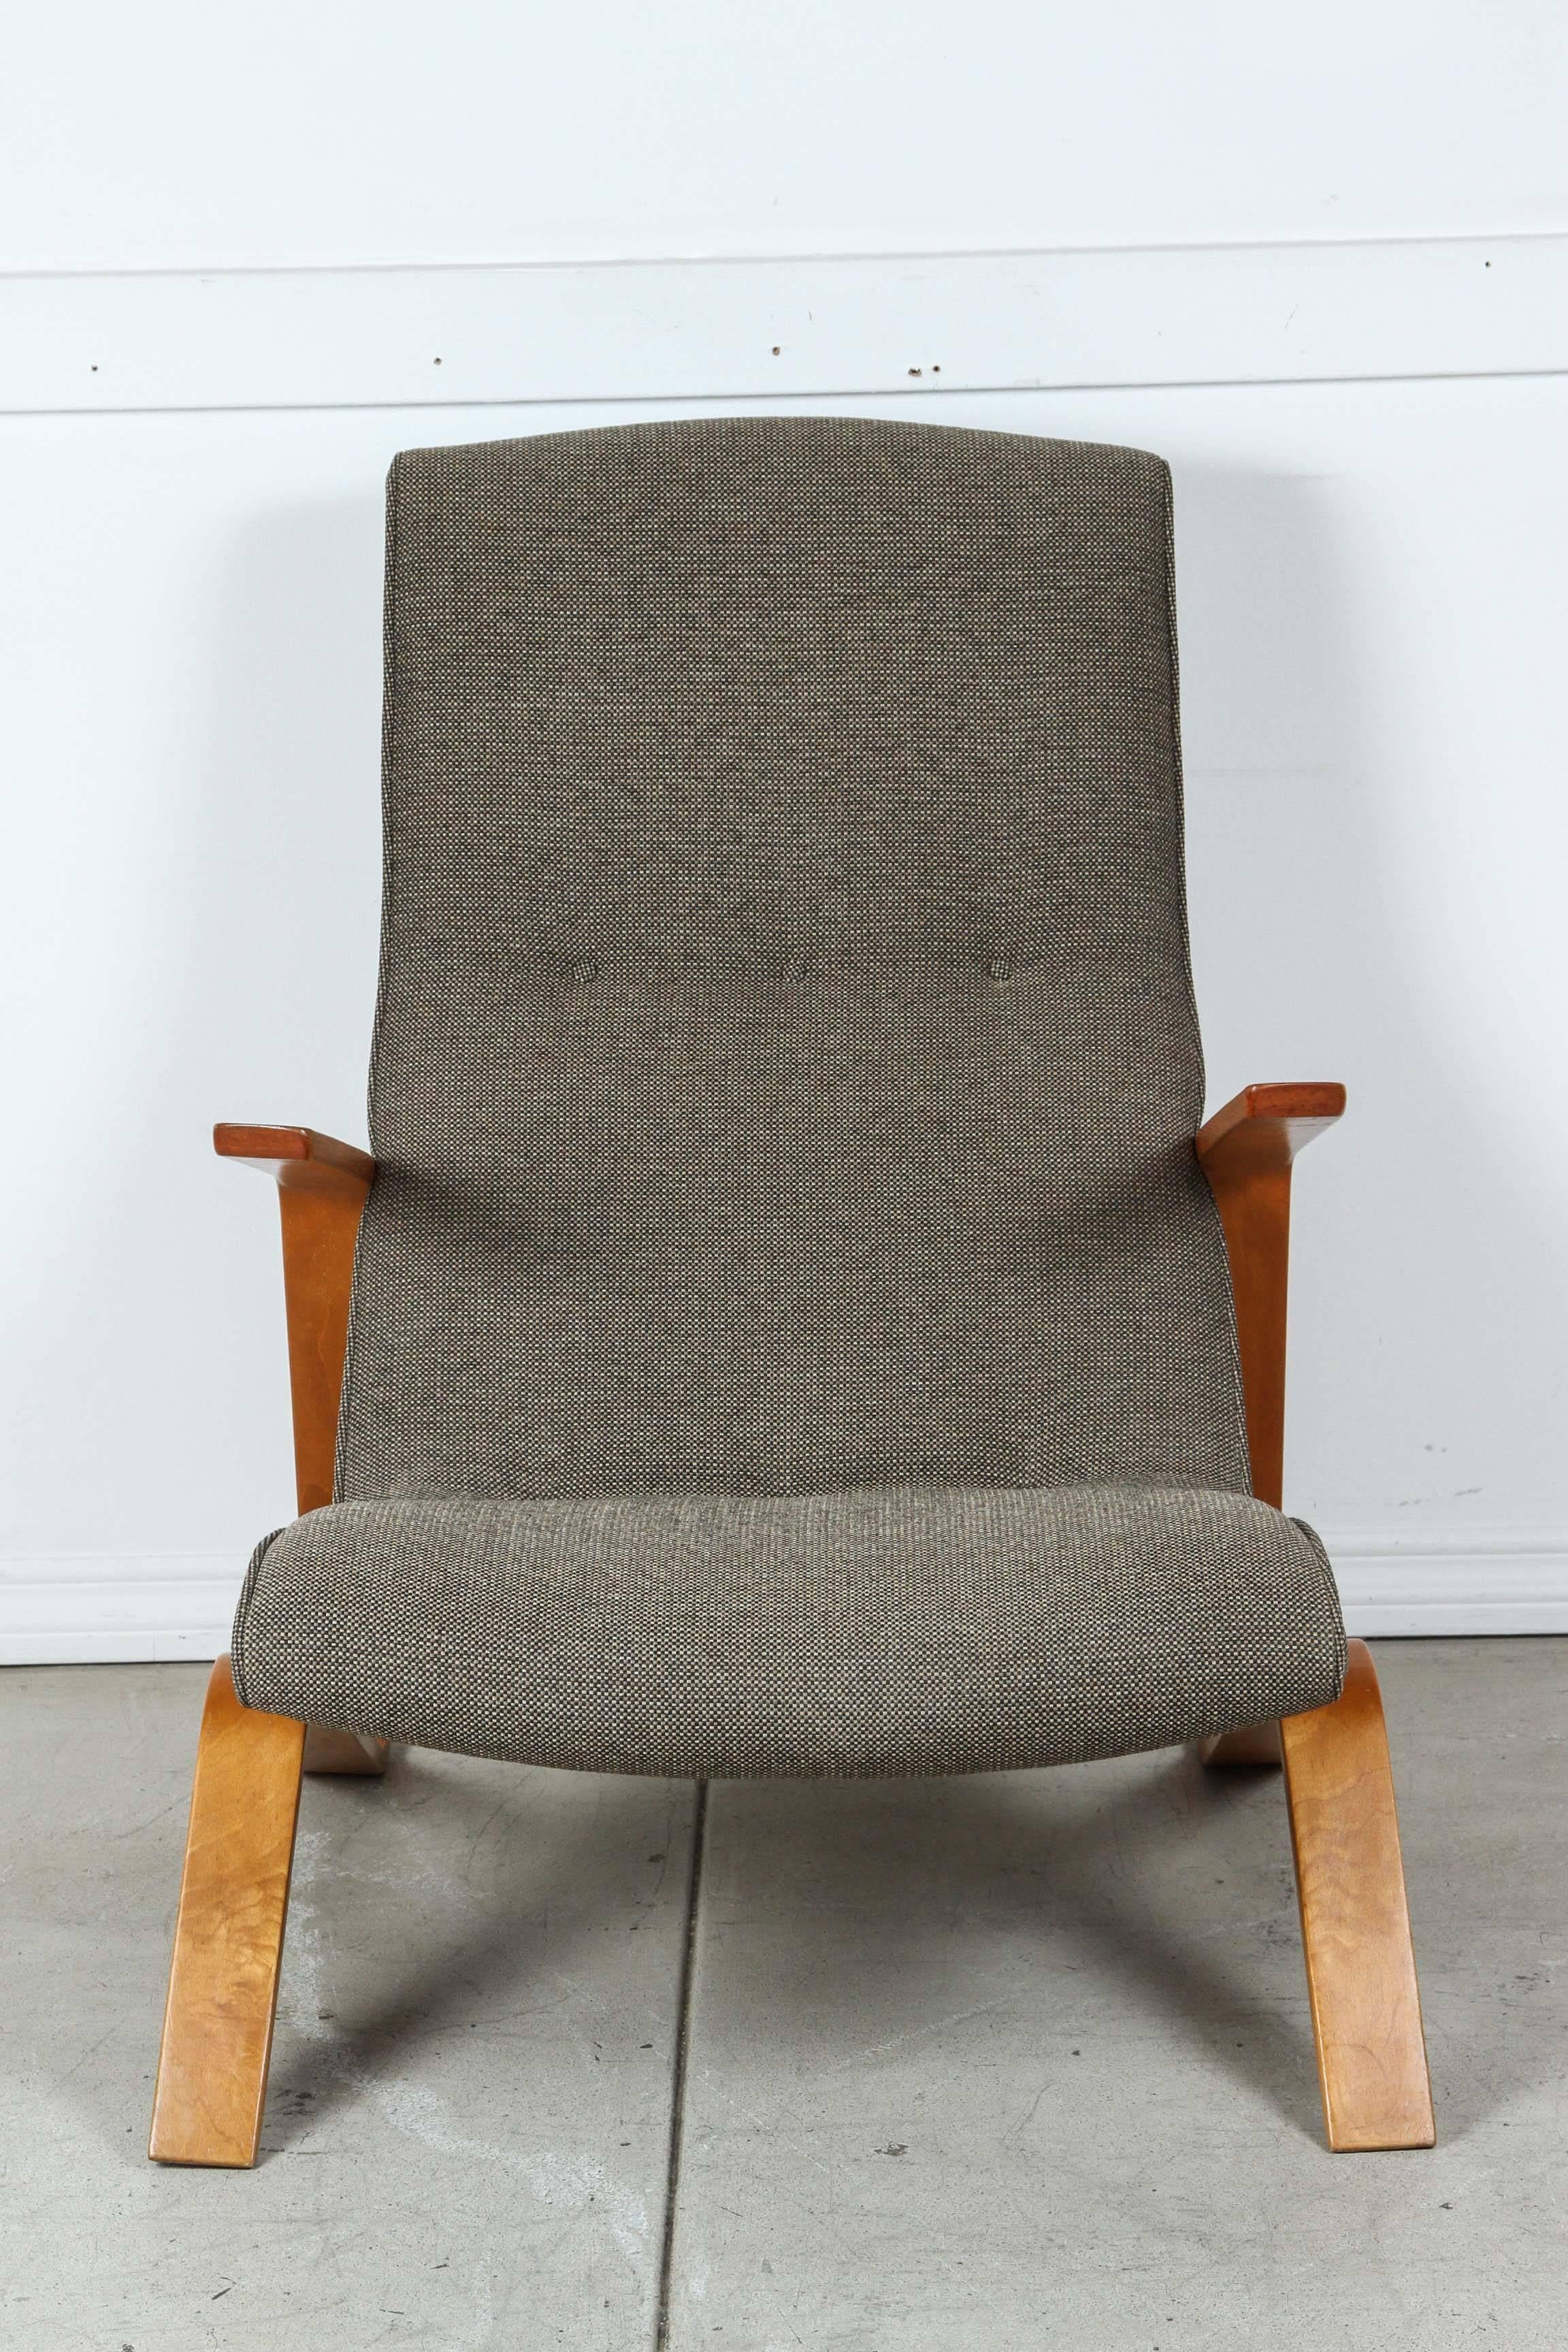 Reupholstered Eero Saarinen grasshopper chair for Knoll.